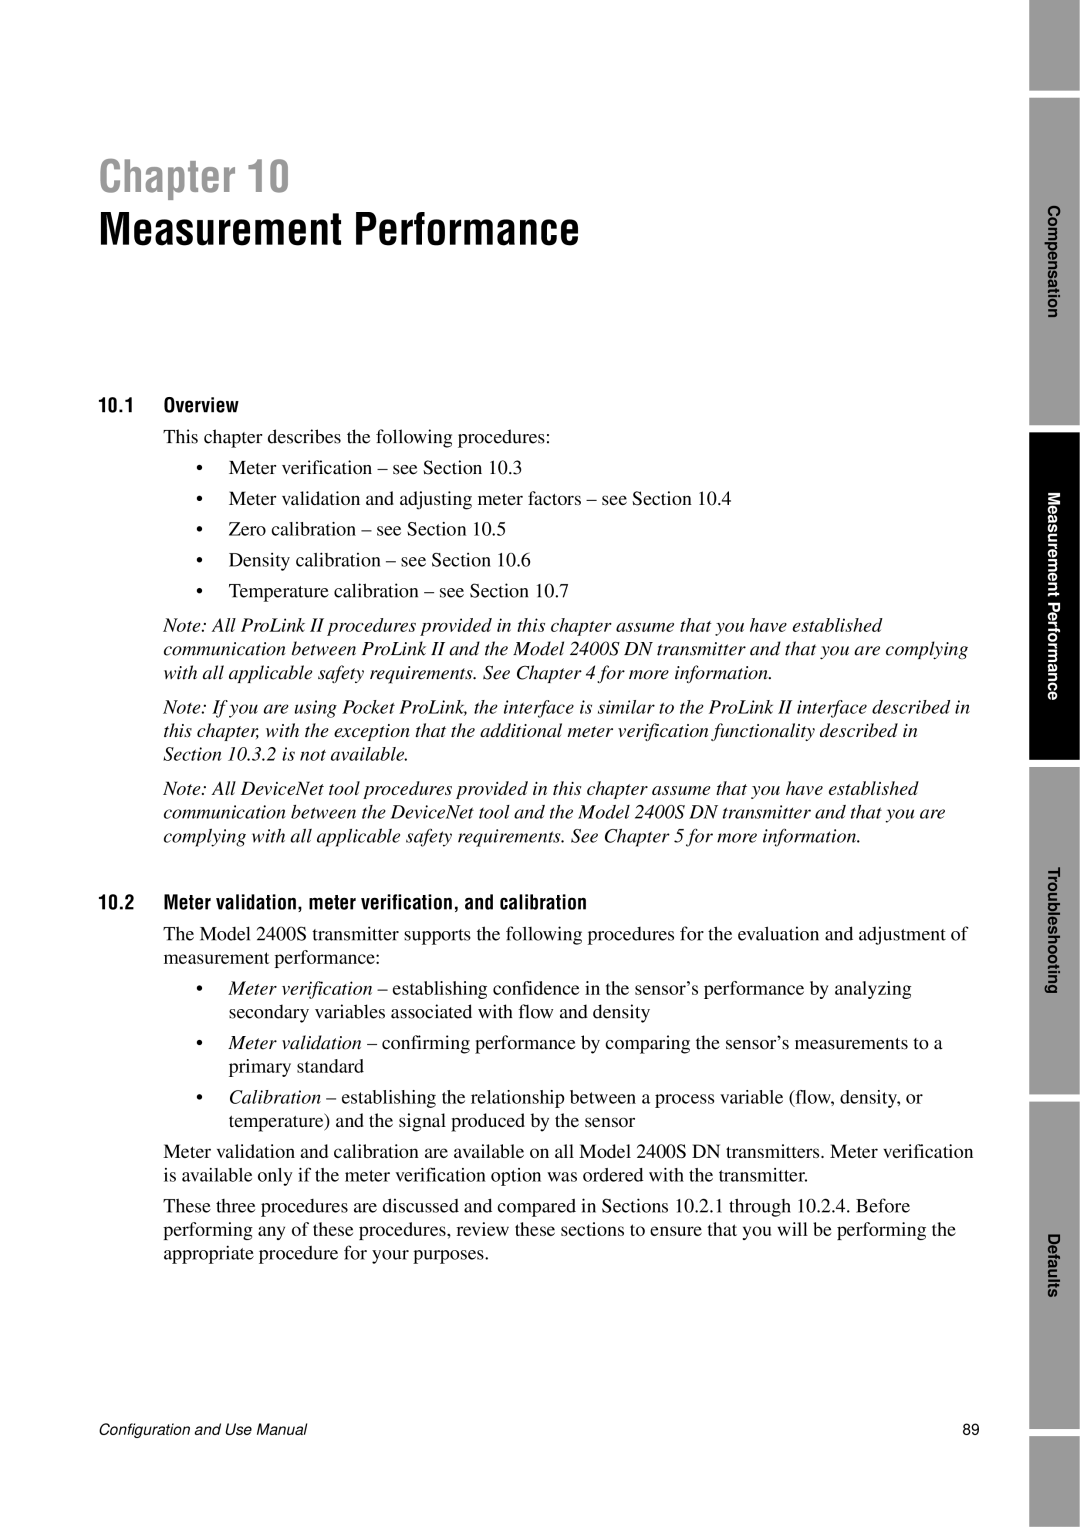 Emerson Process Management 2400S manual Measurement Performance, Chapter, 10.1Overview 